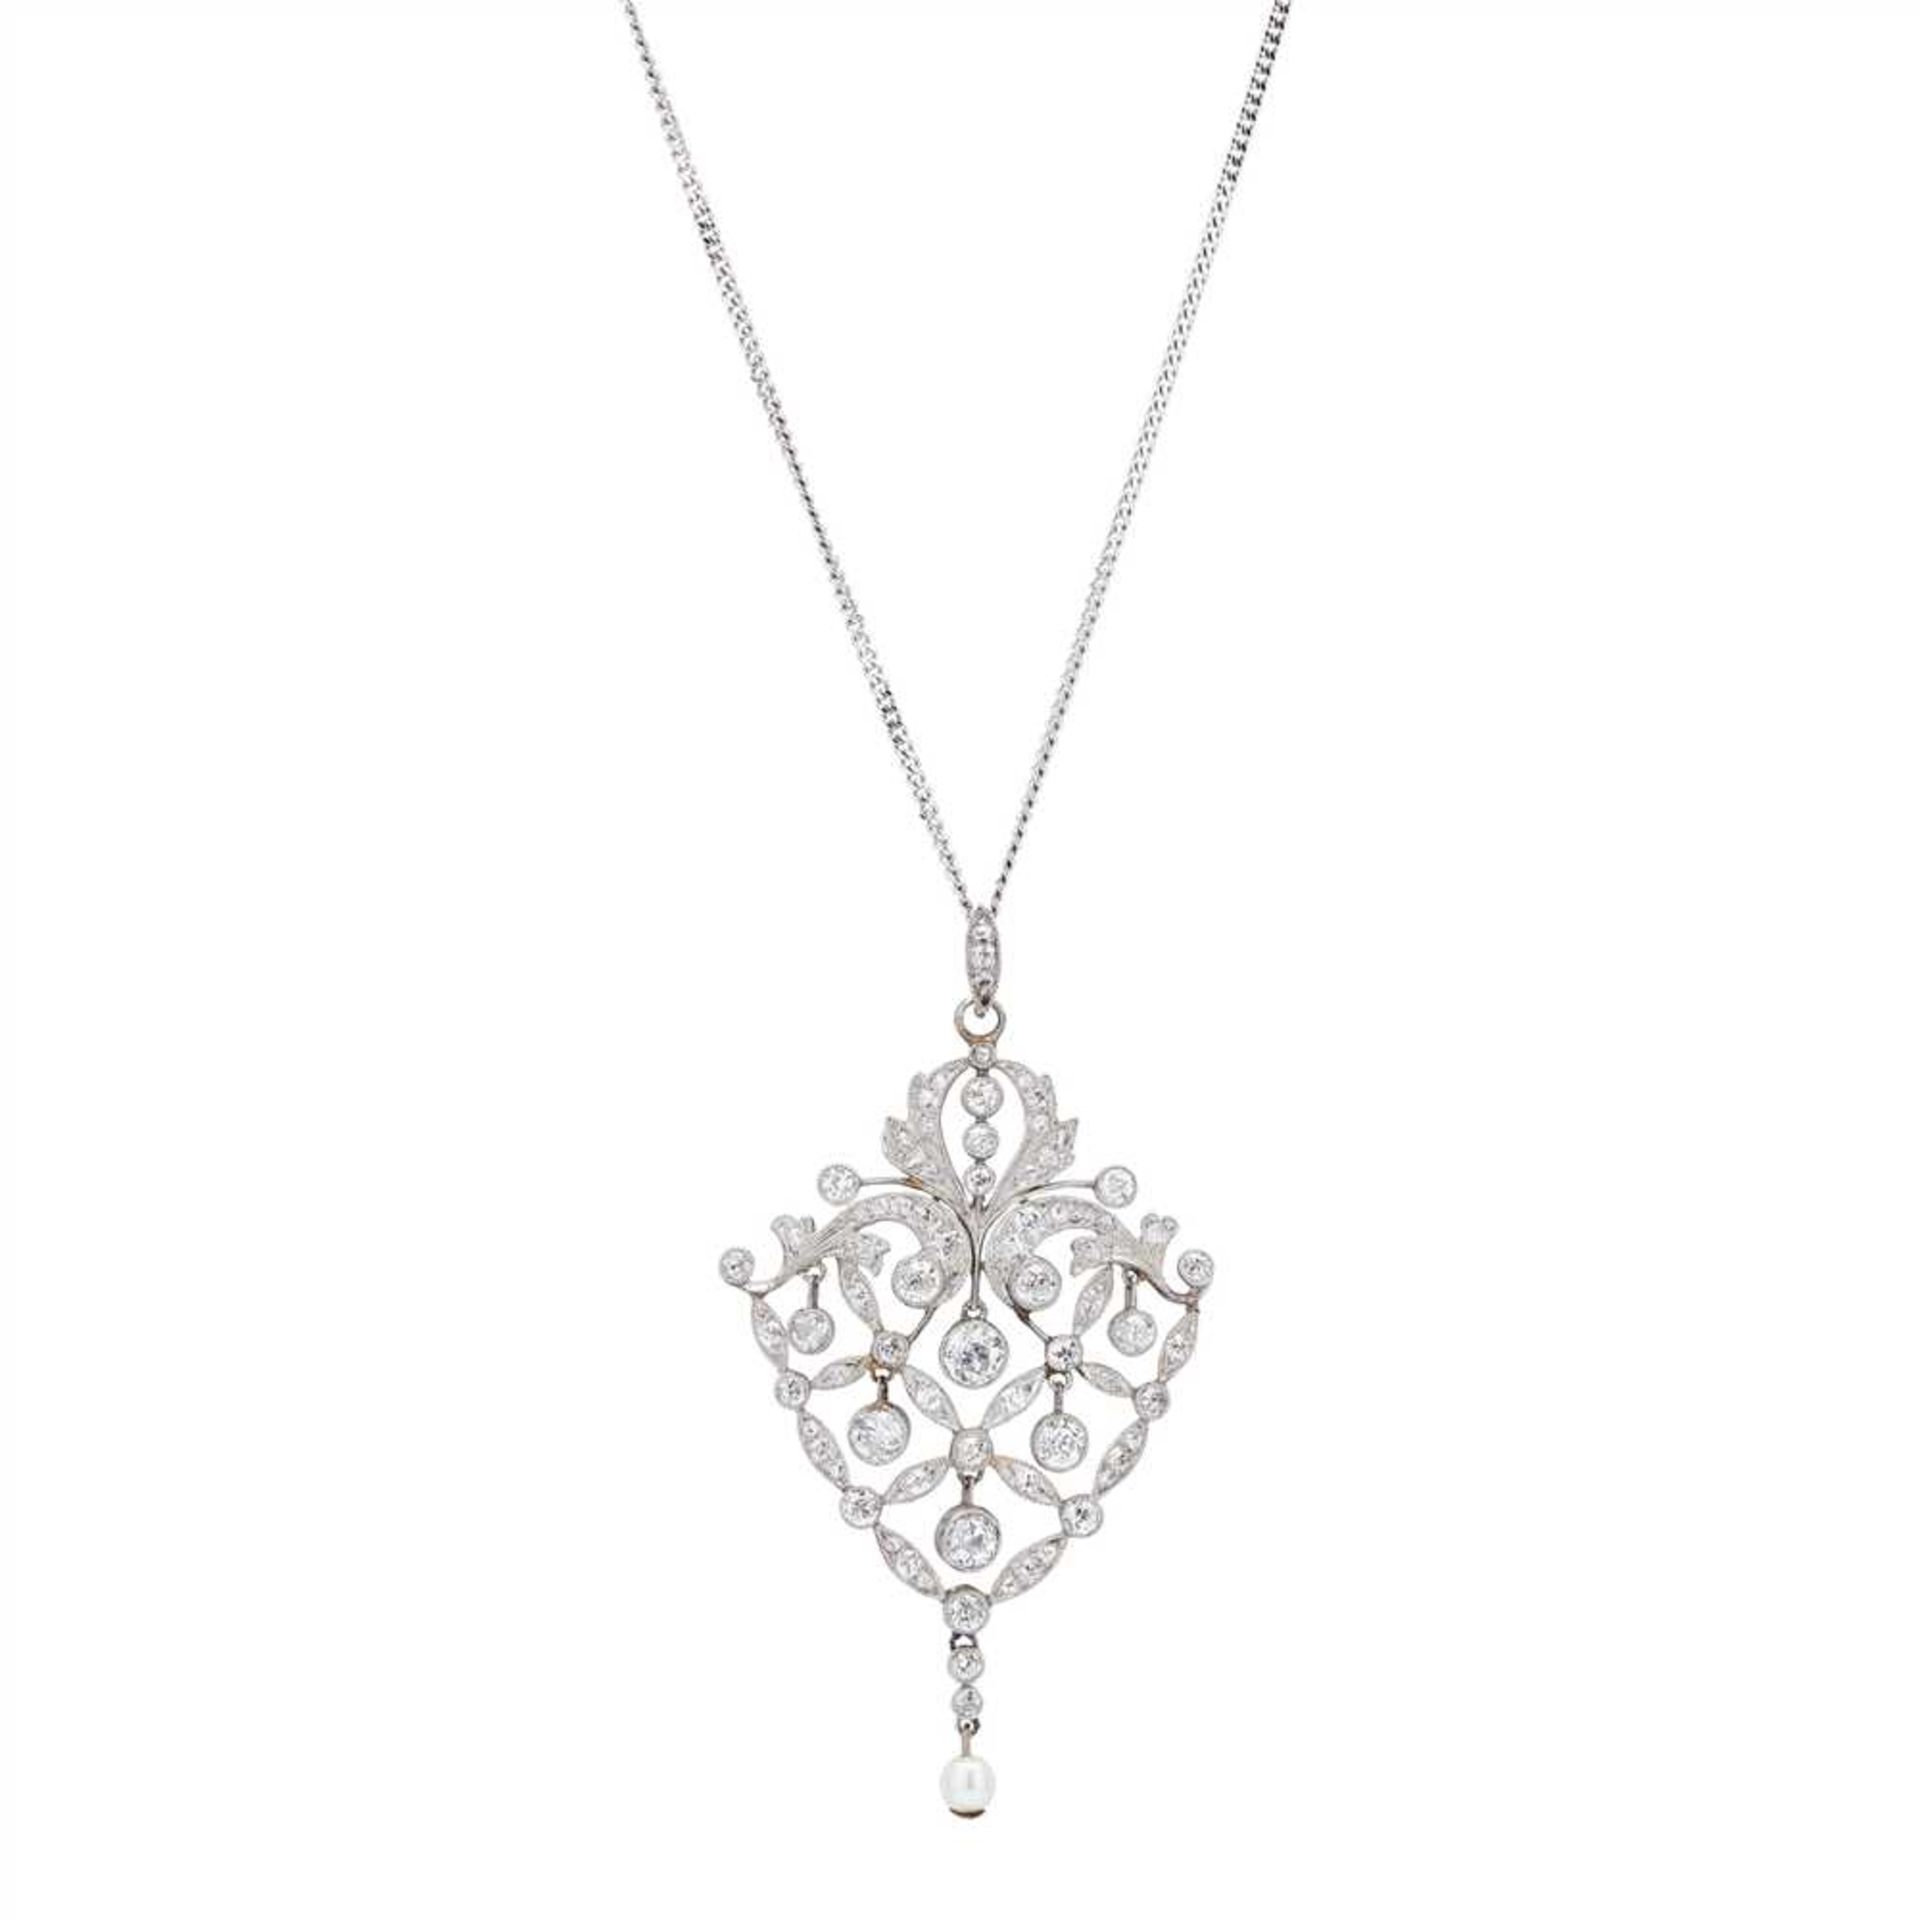 An Edwardian diamond set pendant